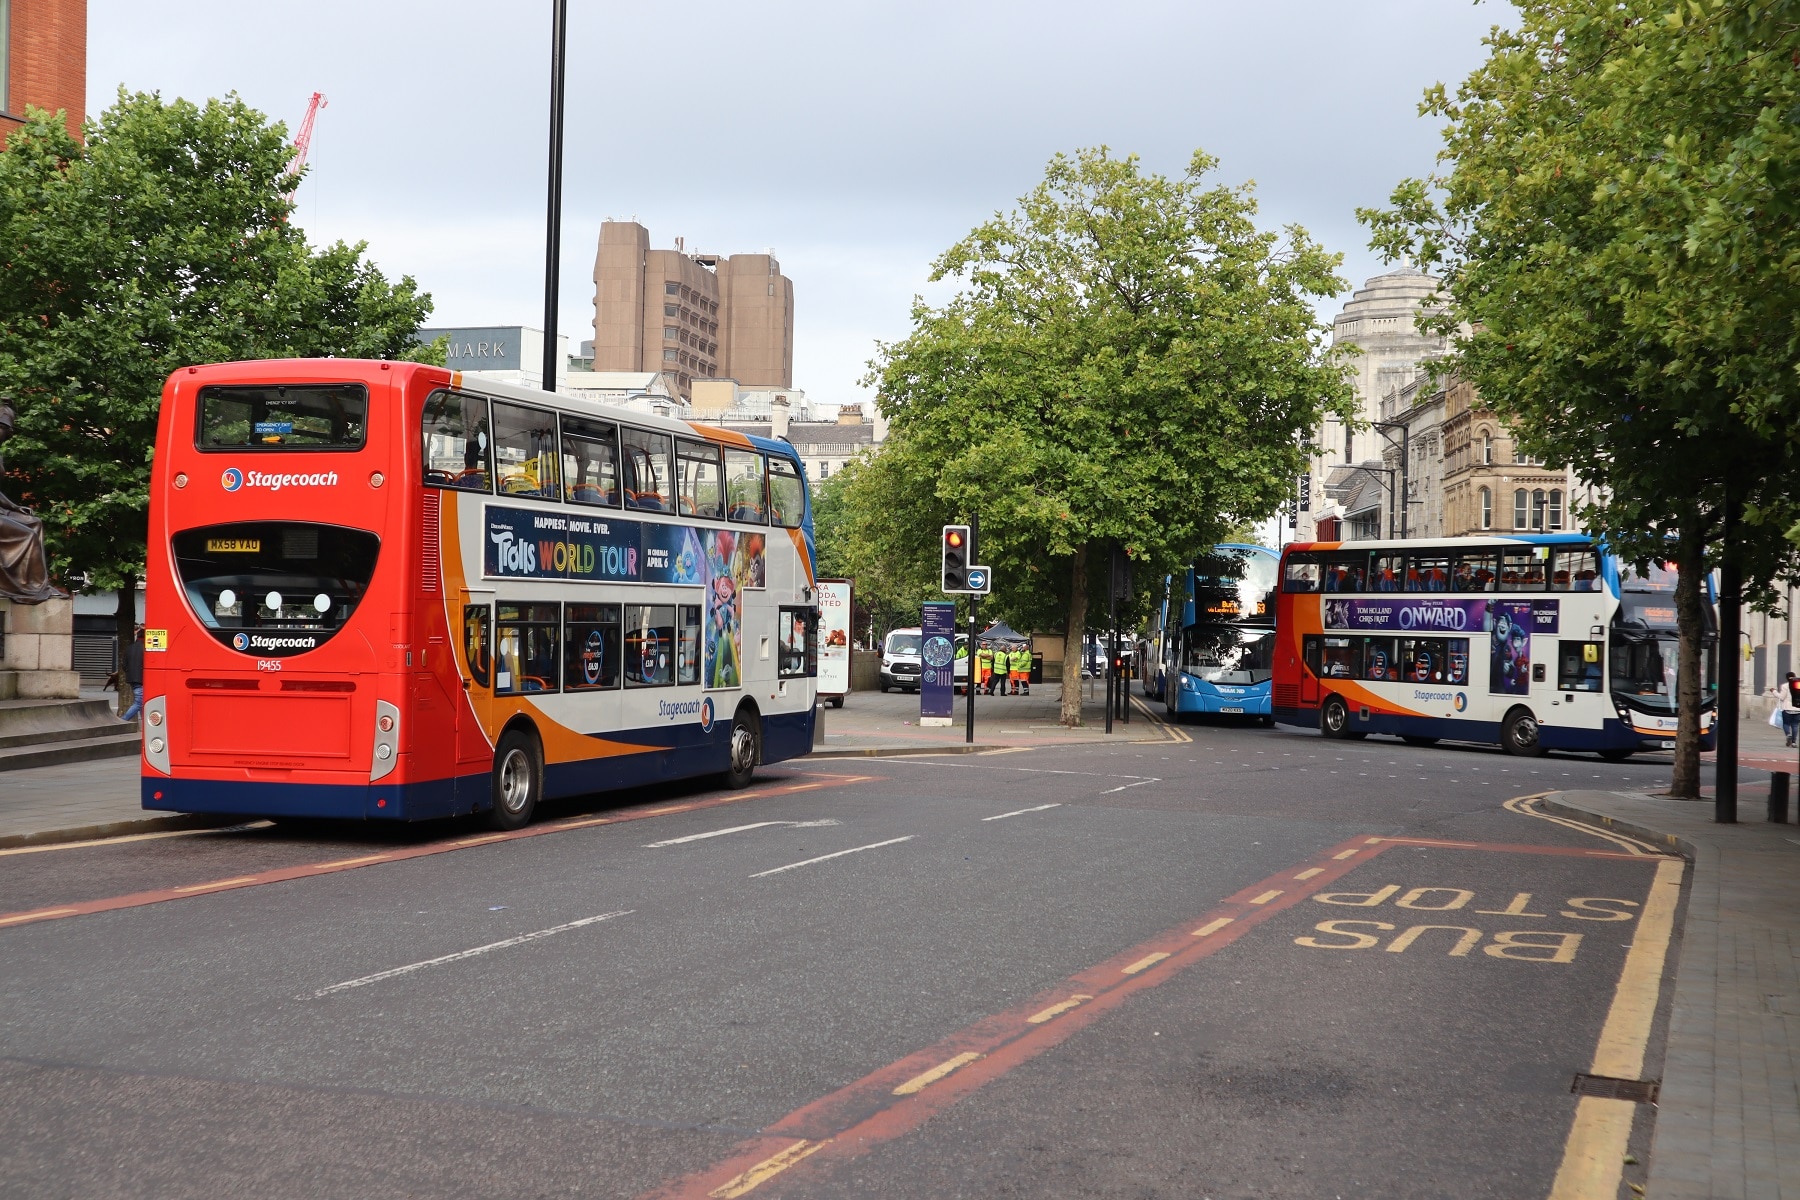 Manchester bus franchising procurement set to begin